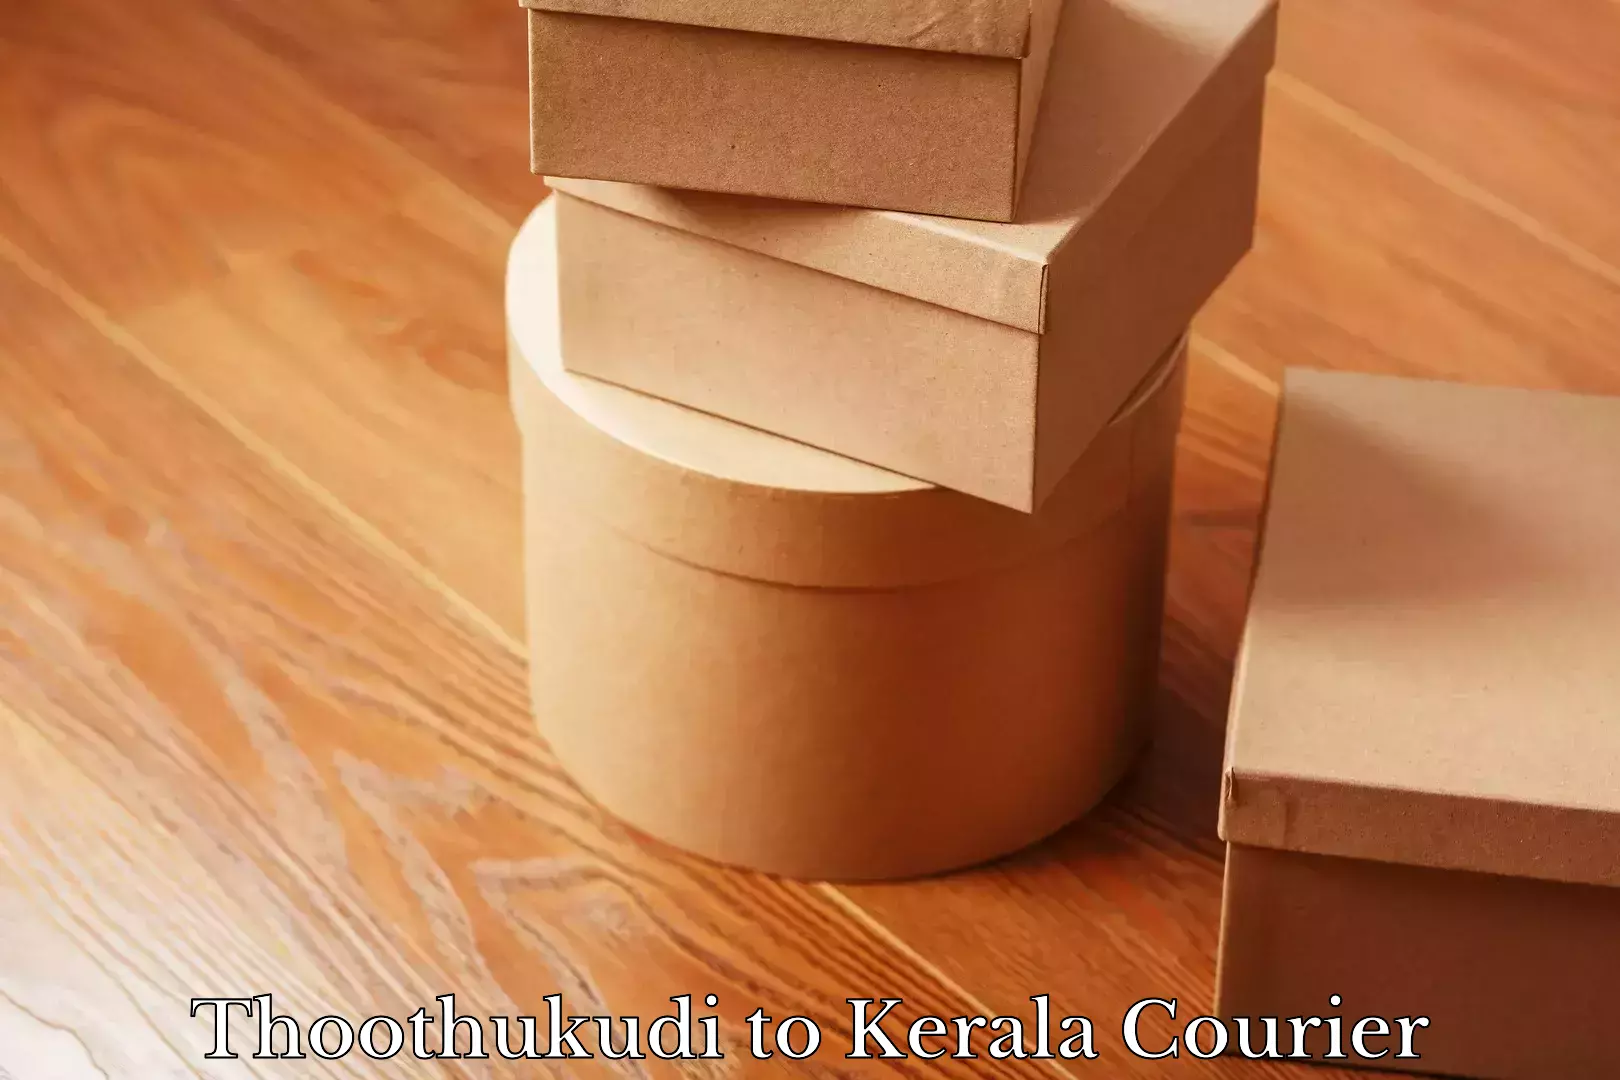 Courier service innovation Thoothukudi to Kerala